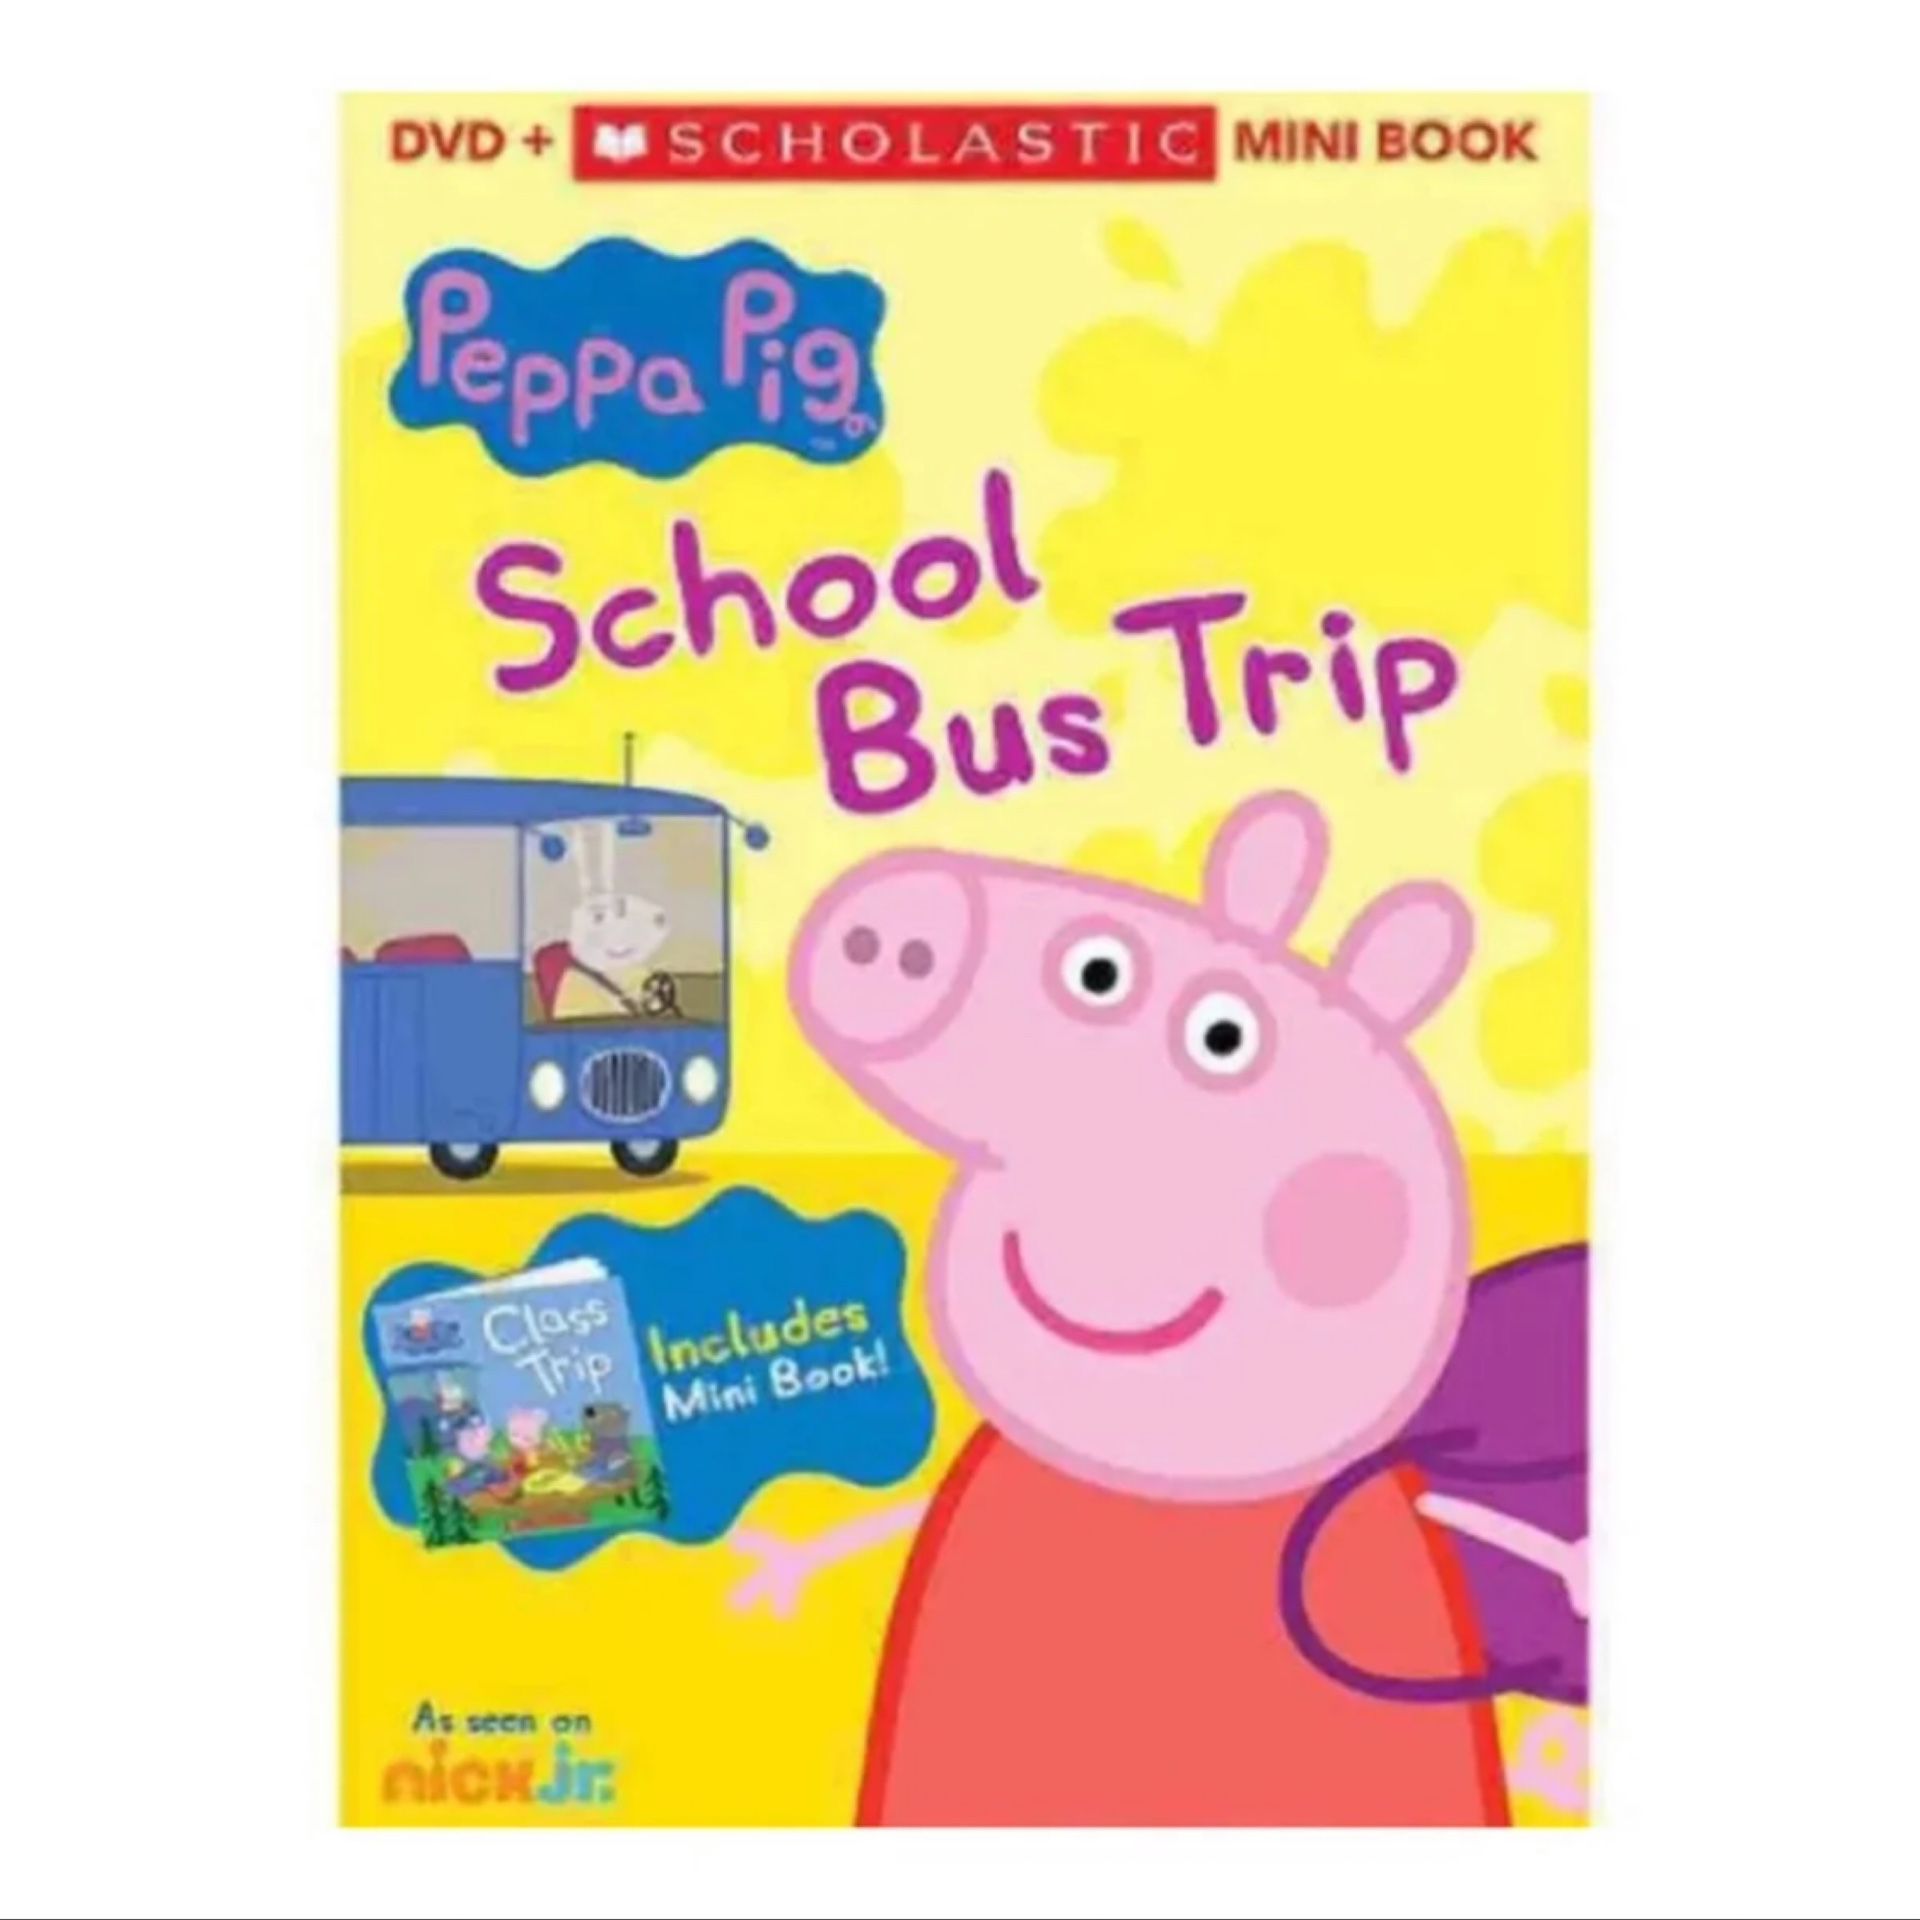 Peppa Pig DVD - School Bus Trip